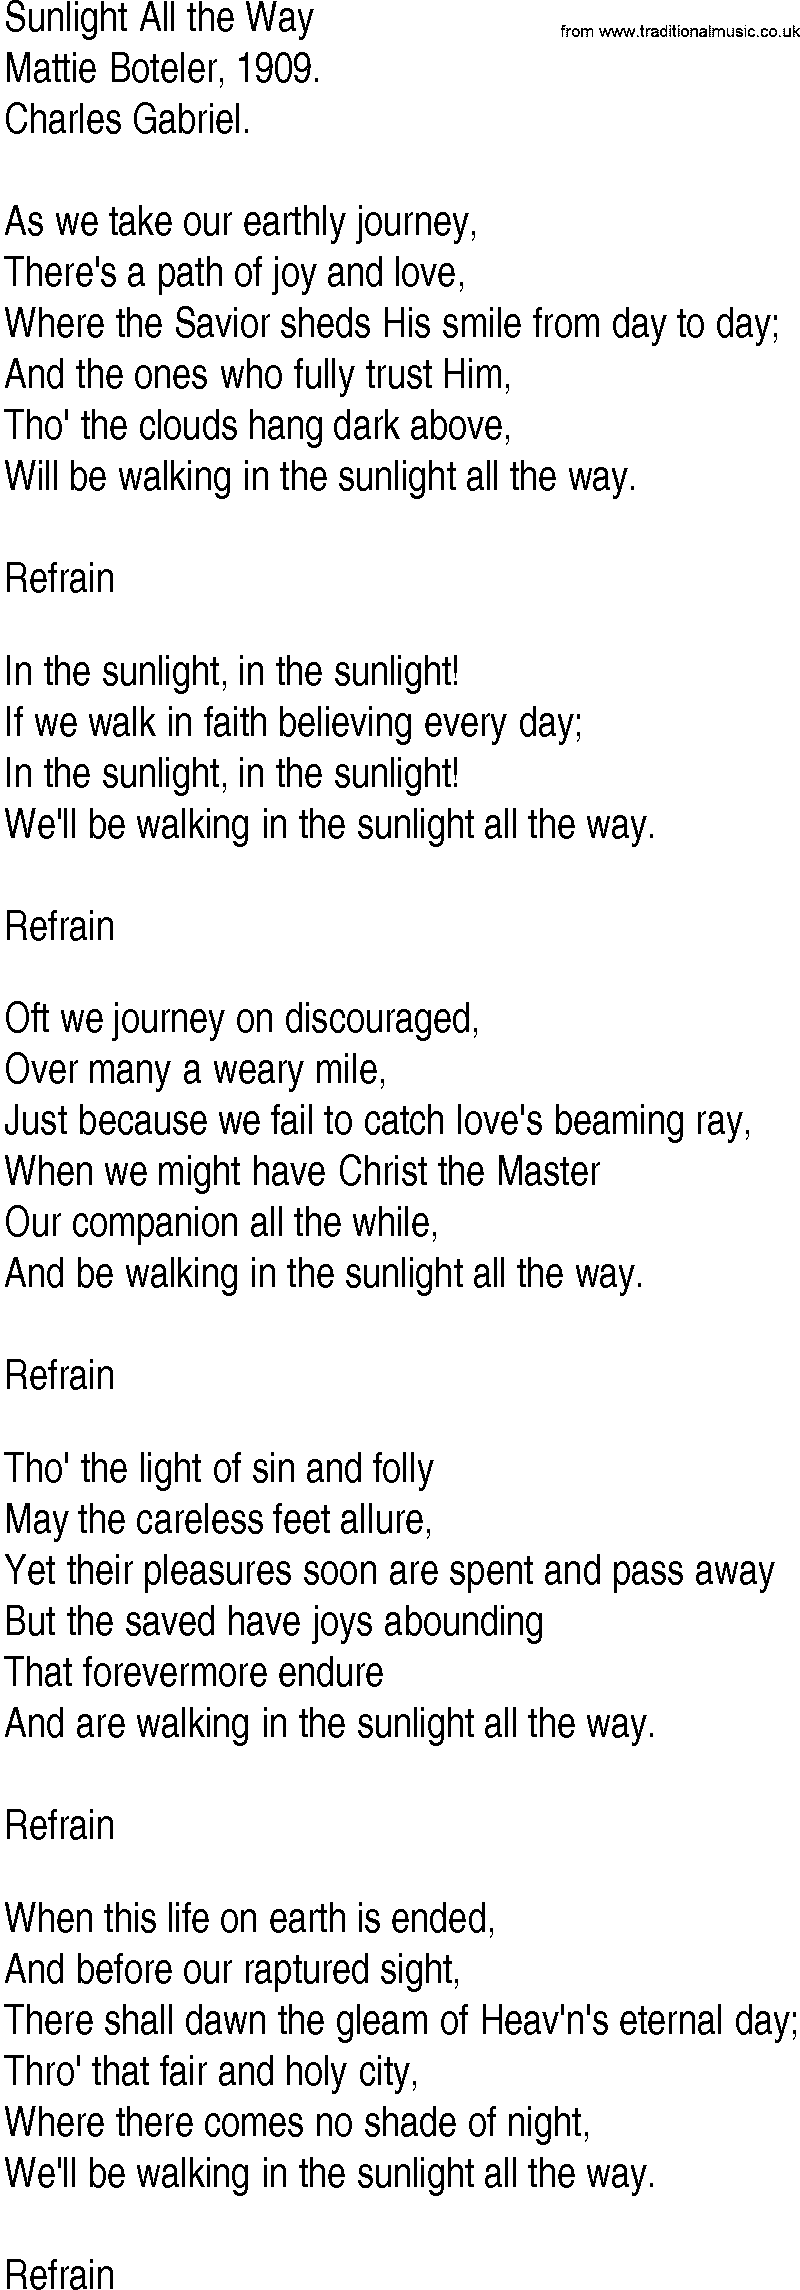 Hymn and Gospel Song: Sunlight All the Way by Mattie Boteler lyrics